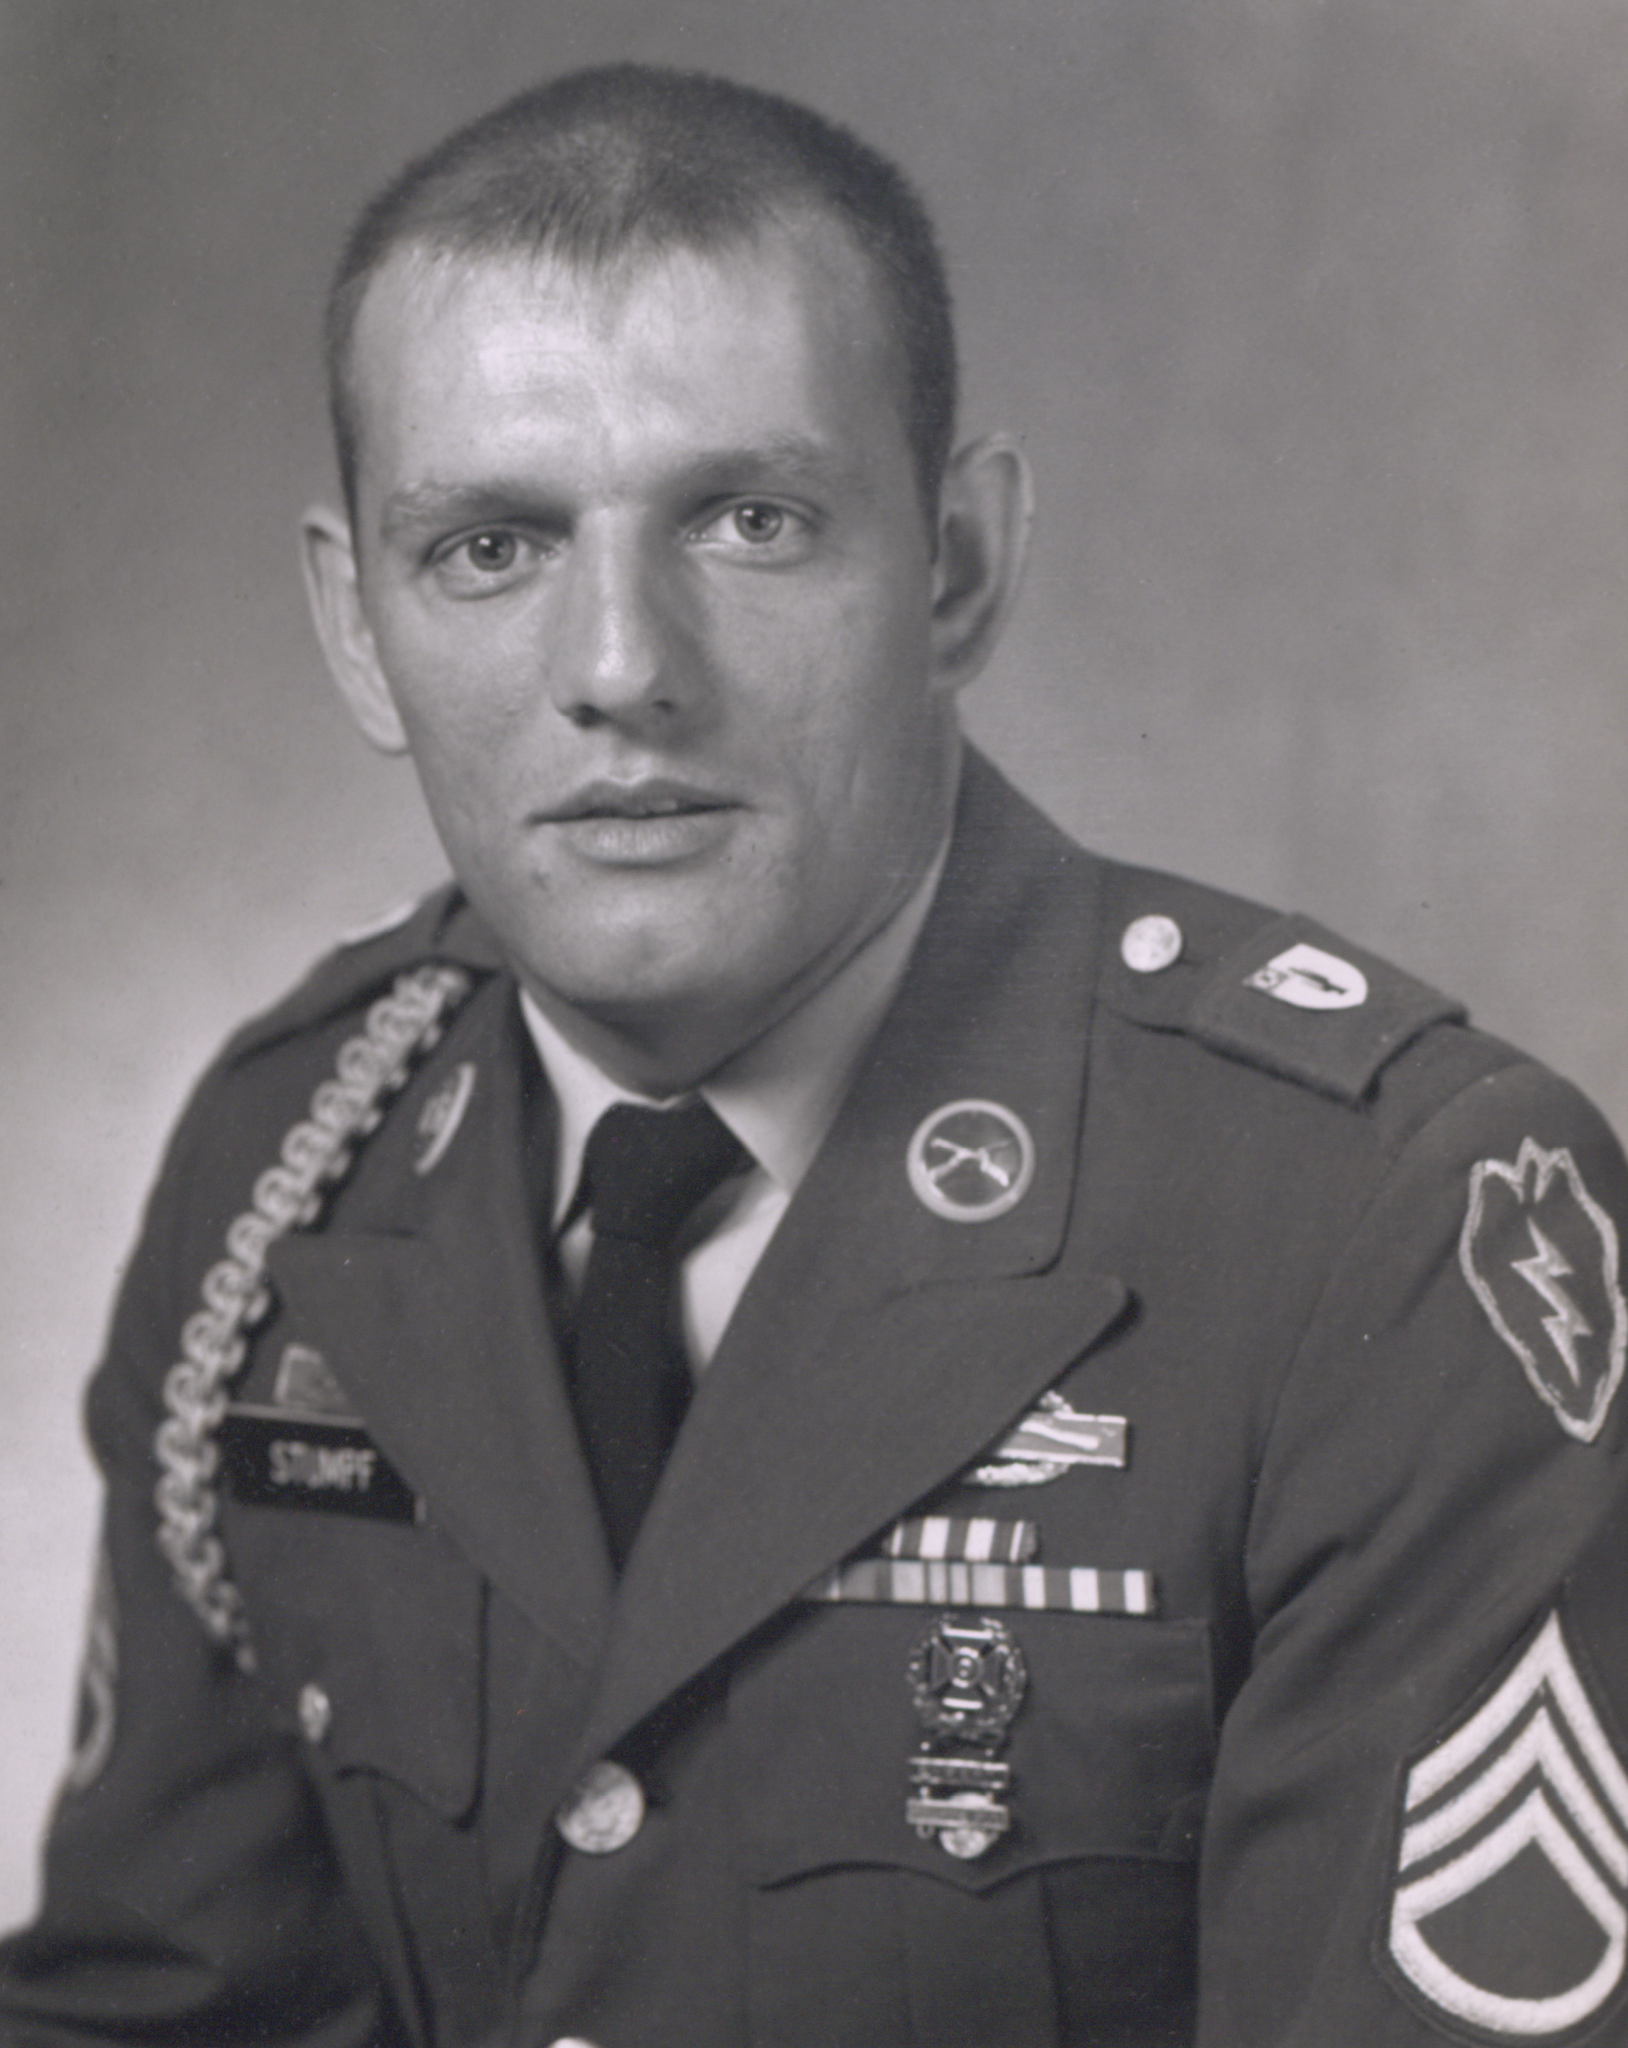 Kenneth Stumpf, Vietnam War Medal of Honor Recipient, Dies At 77